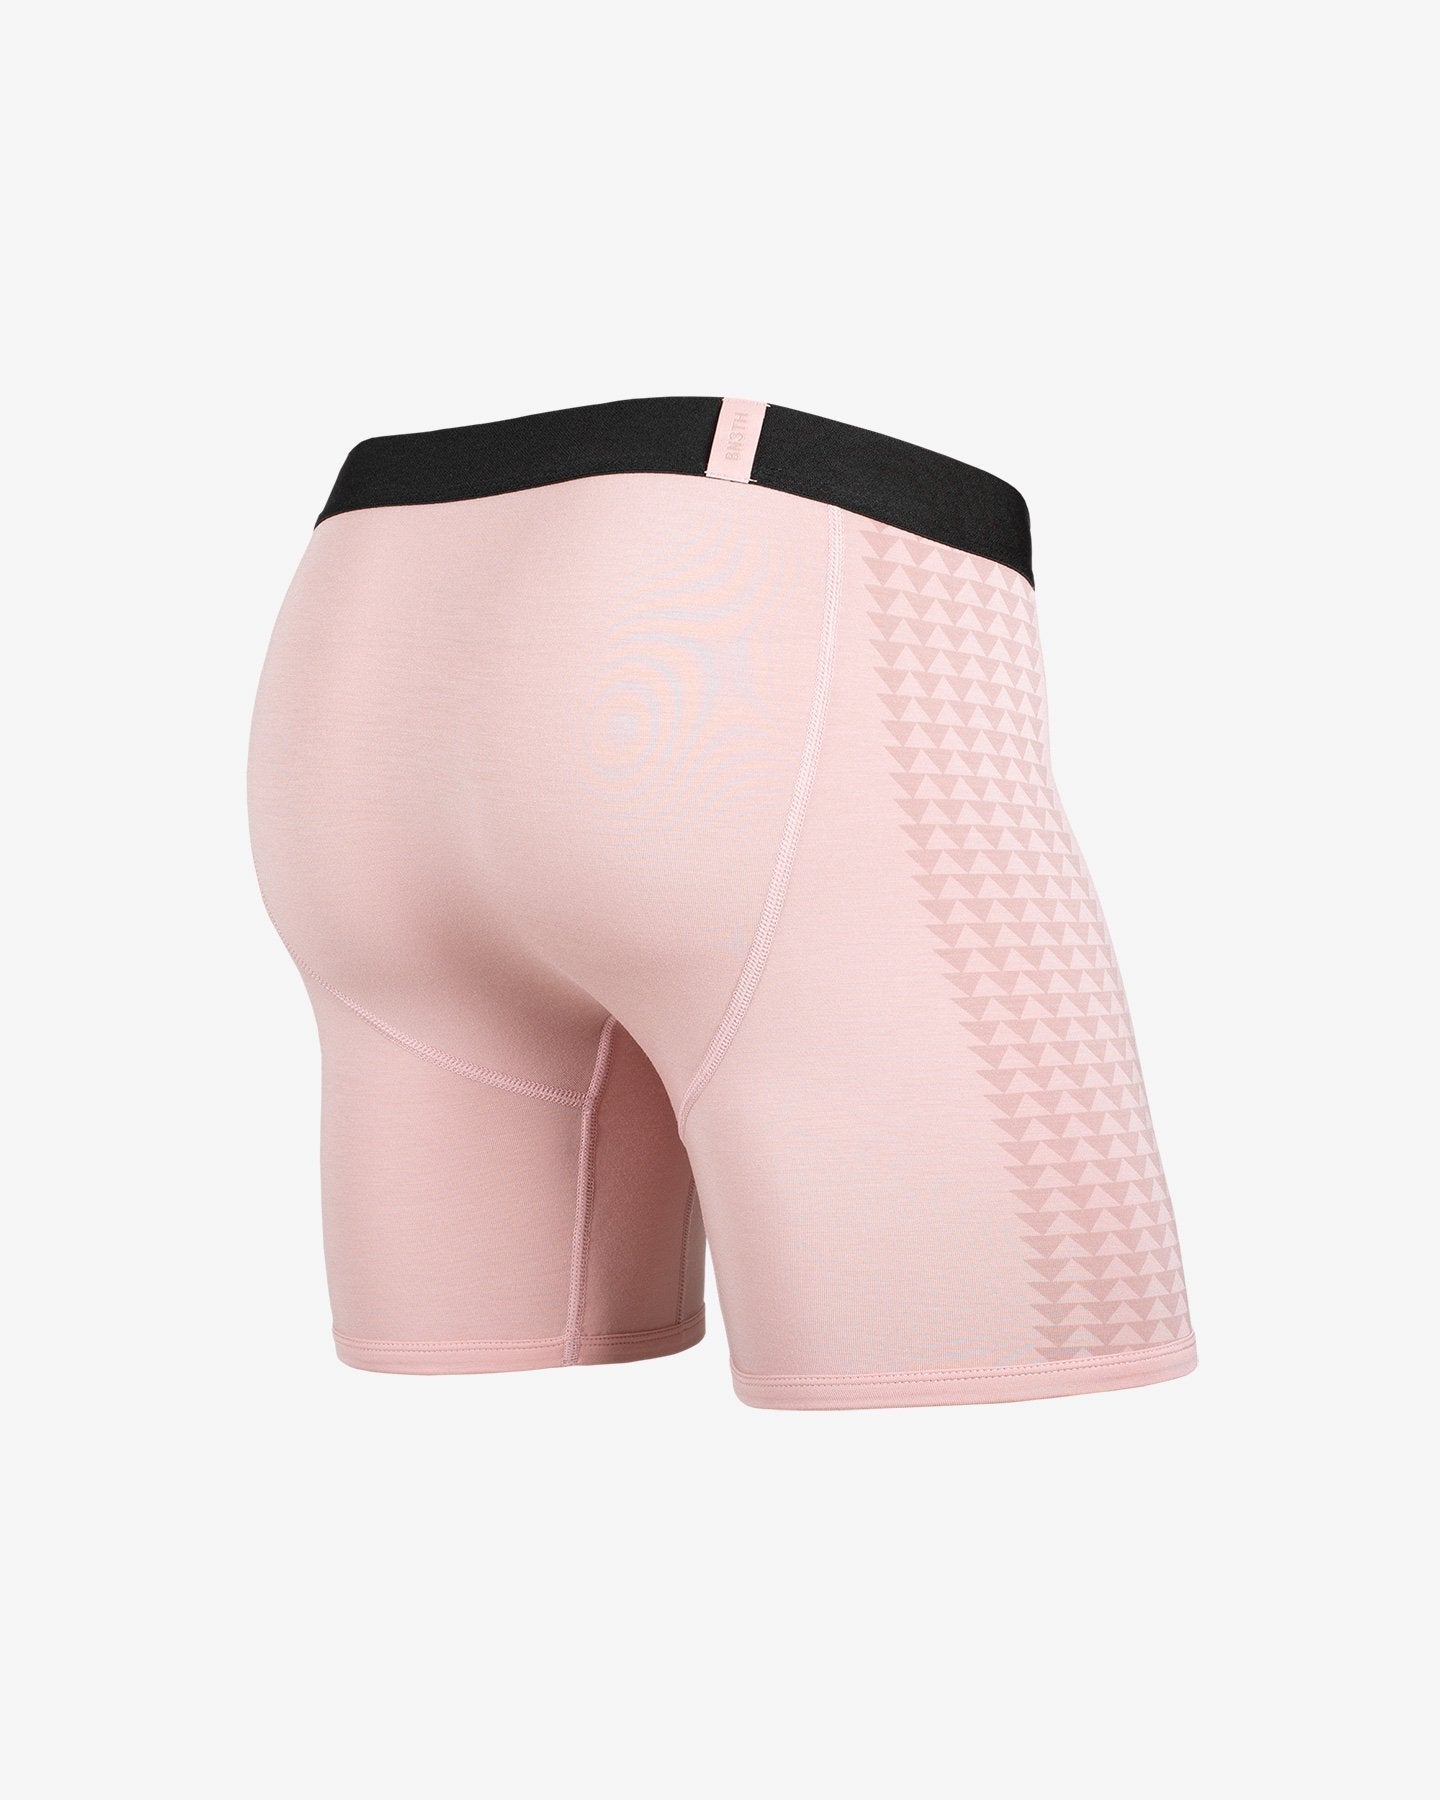 Nike men pink Luxe cotton modal boxer brief underwear size S